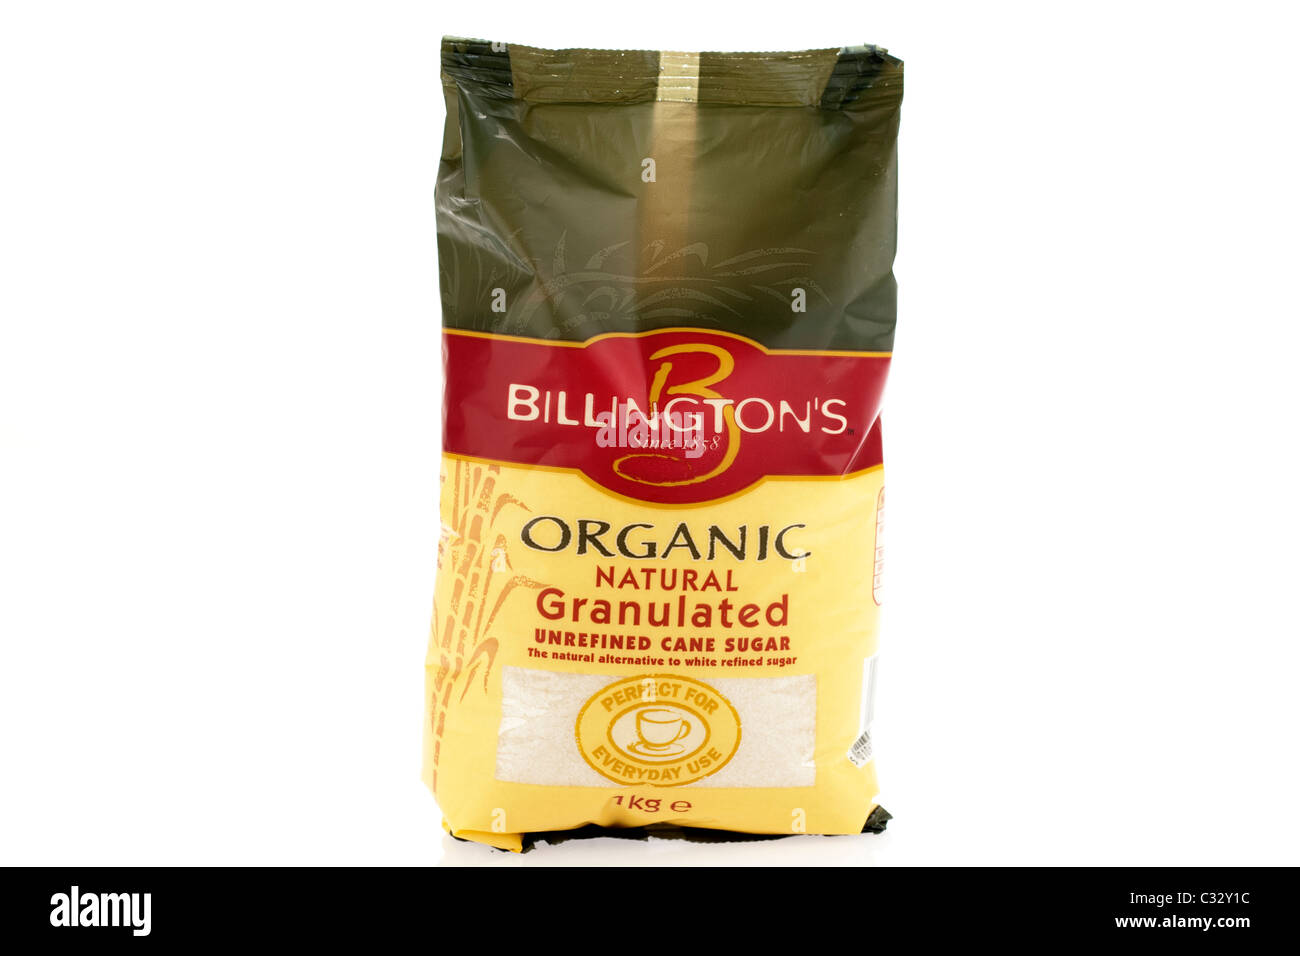 1 kilogram bag of Billingtons organic natural granulated unrefined cane sugar for everday use Stock Photo